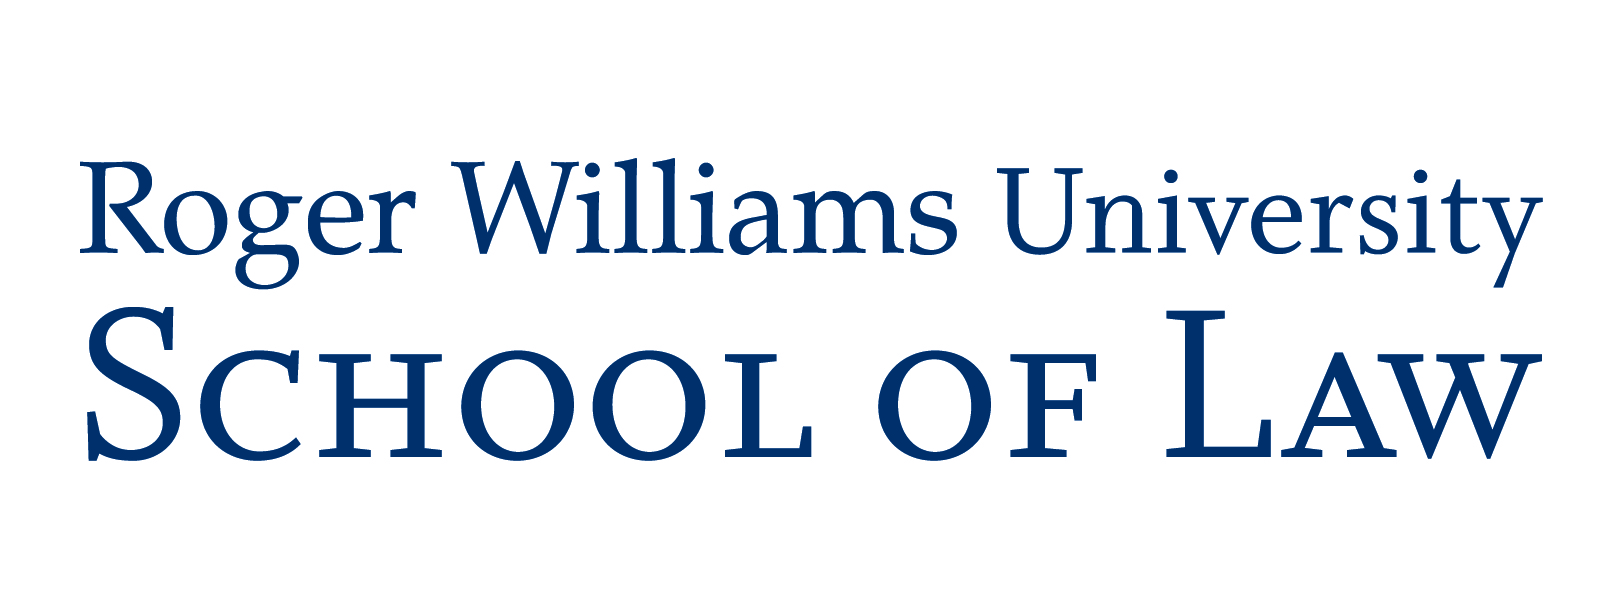 Roger Williams University School of Law logo